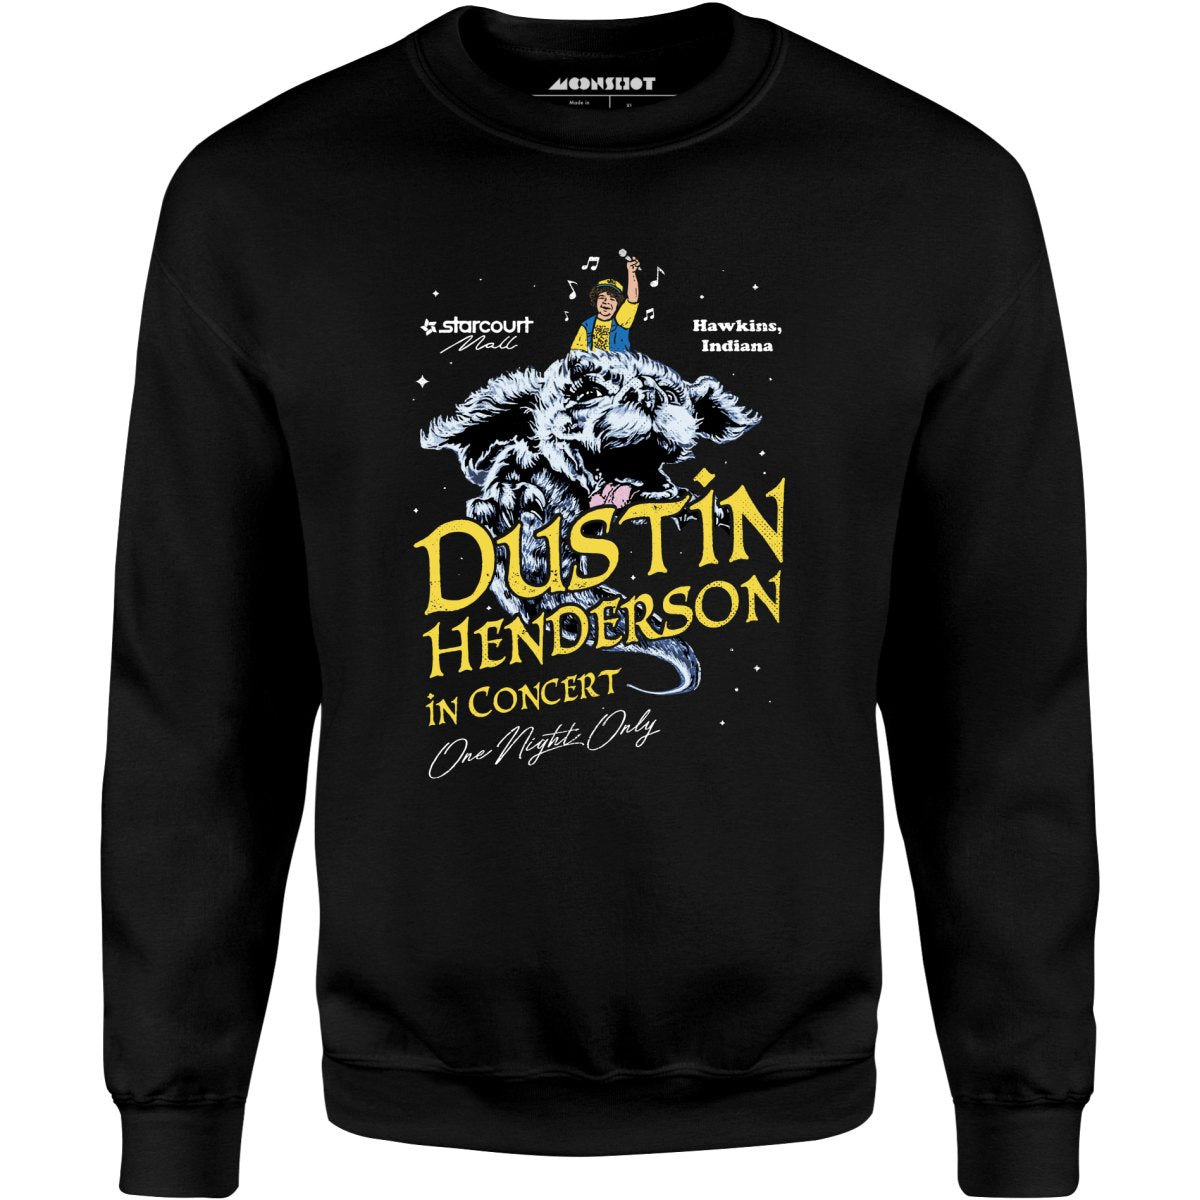 Dustin Henderson in Concert - Unisex Sweatshirt